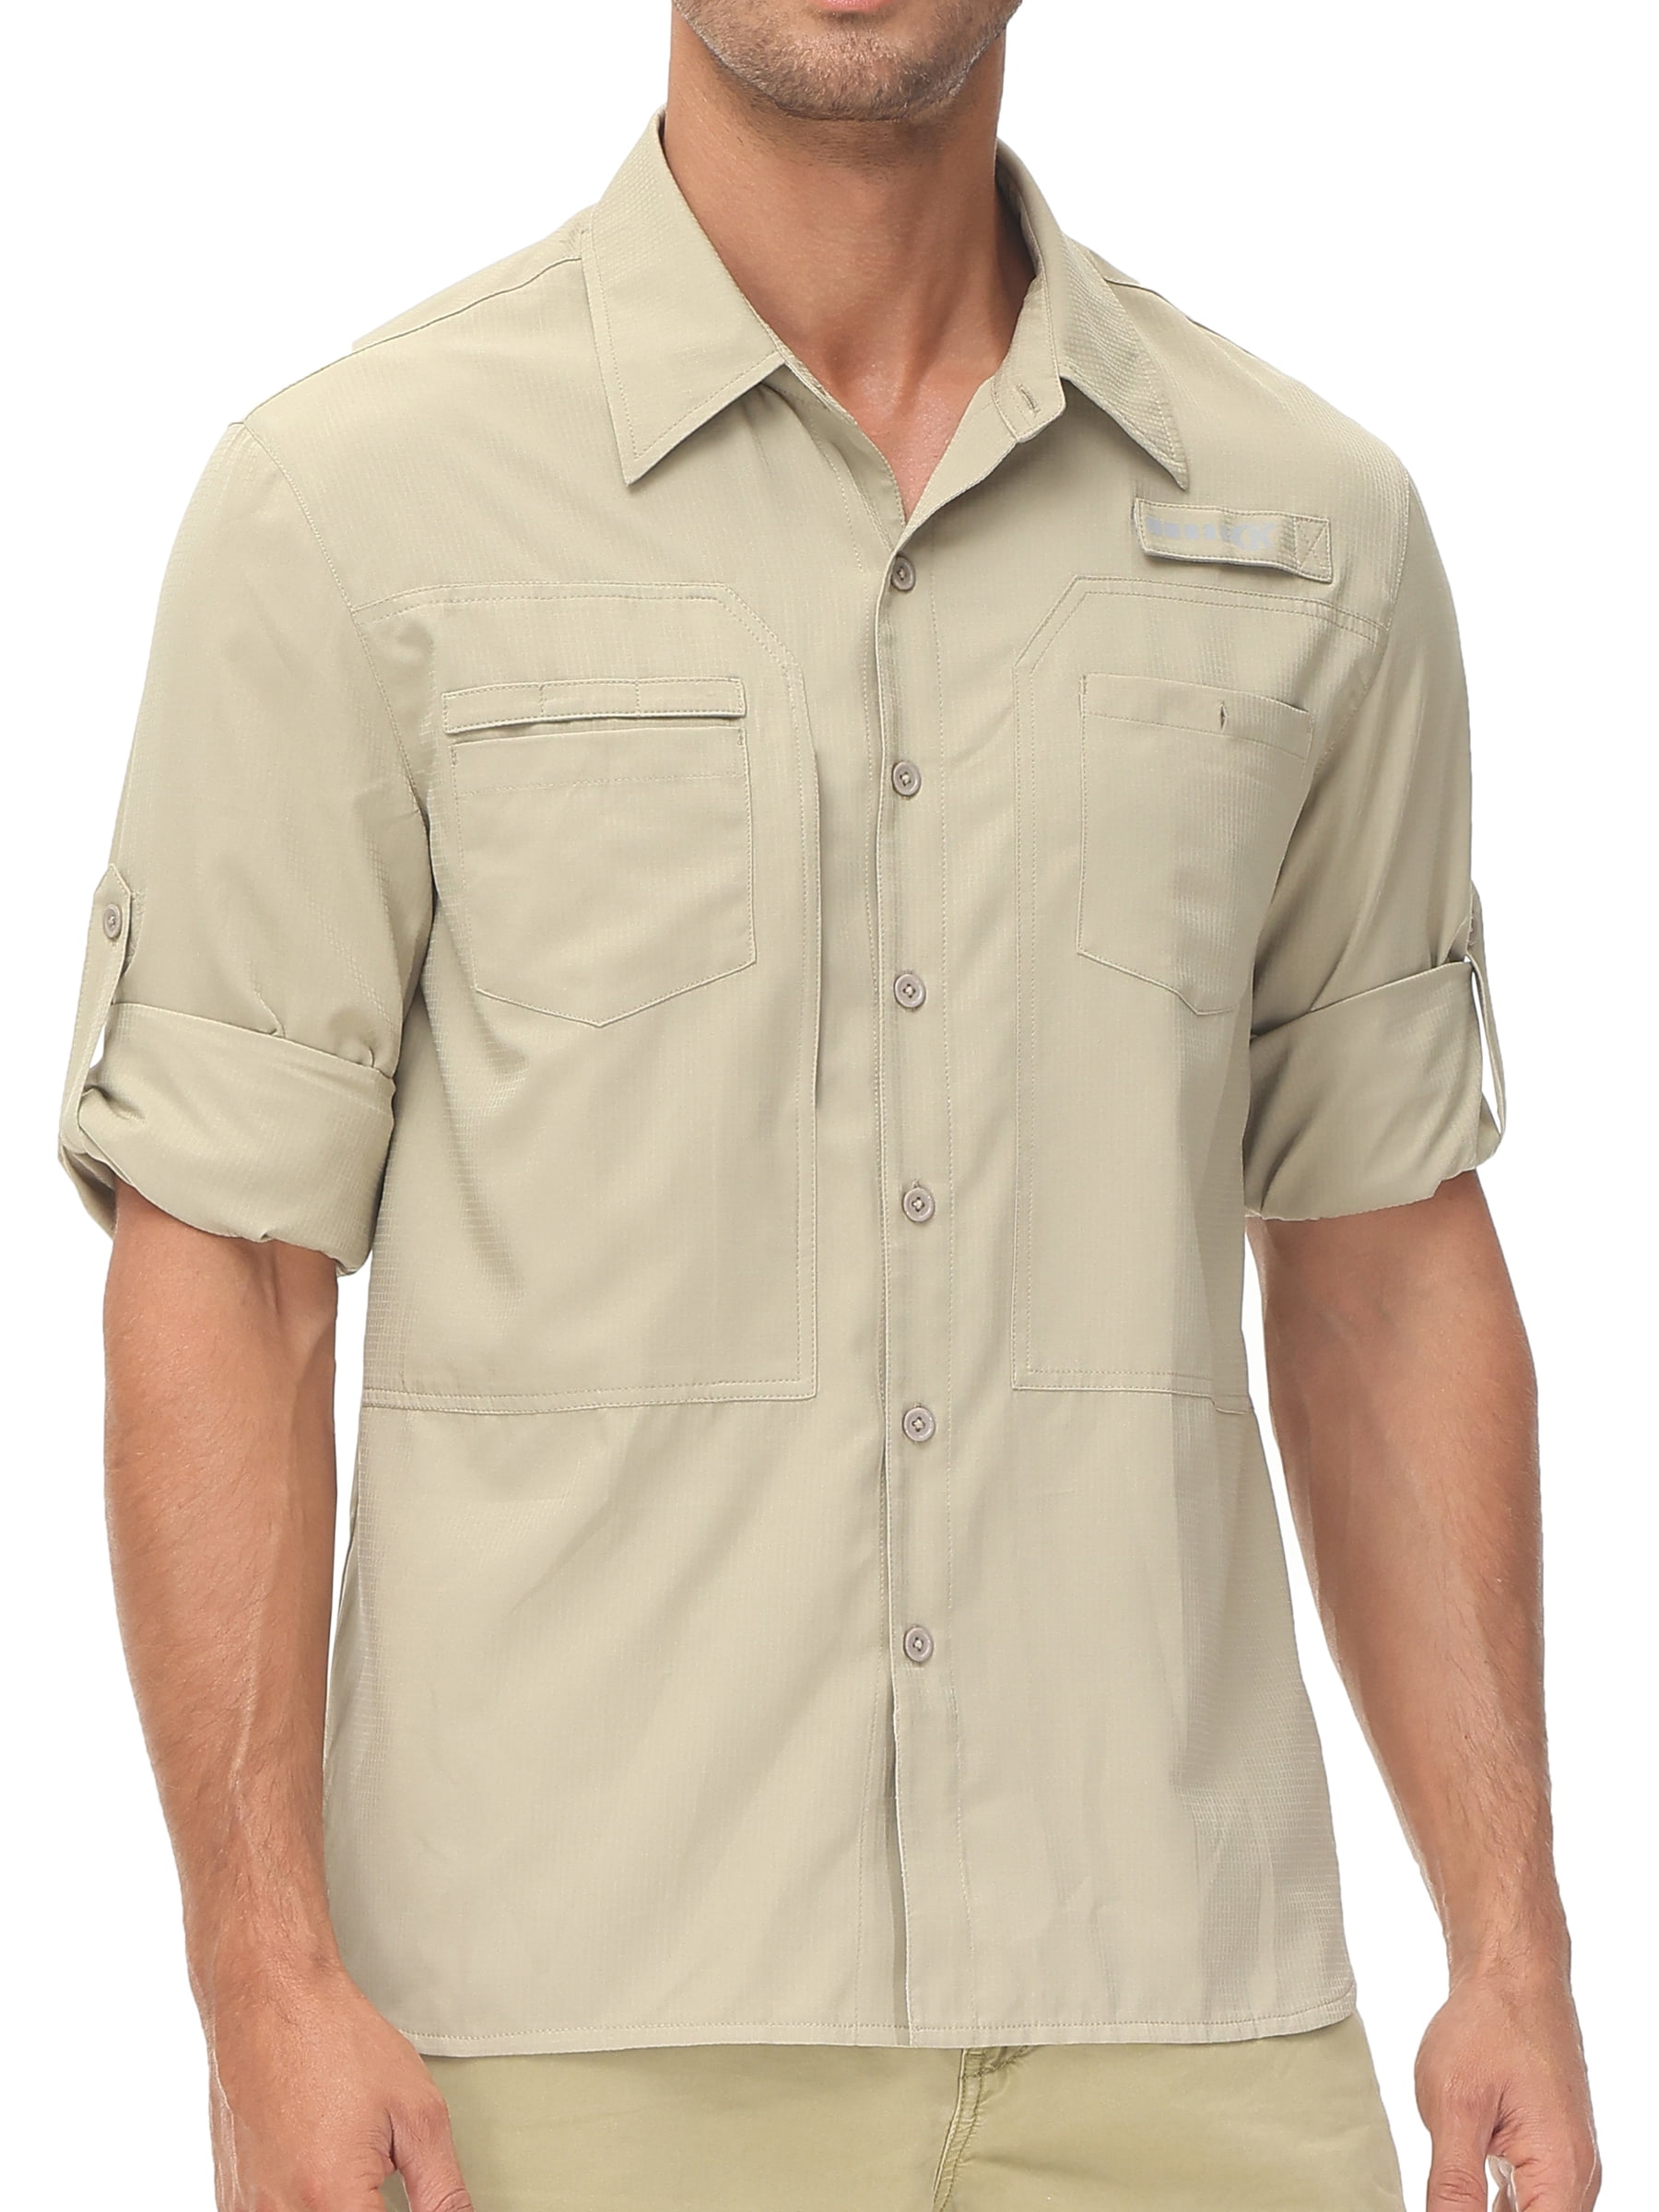 Pdbokew Men's Sun Protection Fishing Shirts Long Sleeve Travel Work Shirts  for Men UPF50+ Button Down Shirts with Zipper Pockets Khaki XL